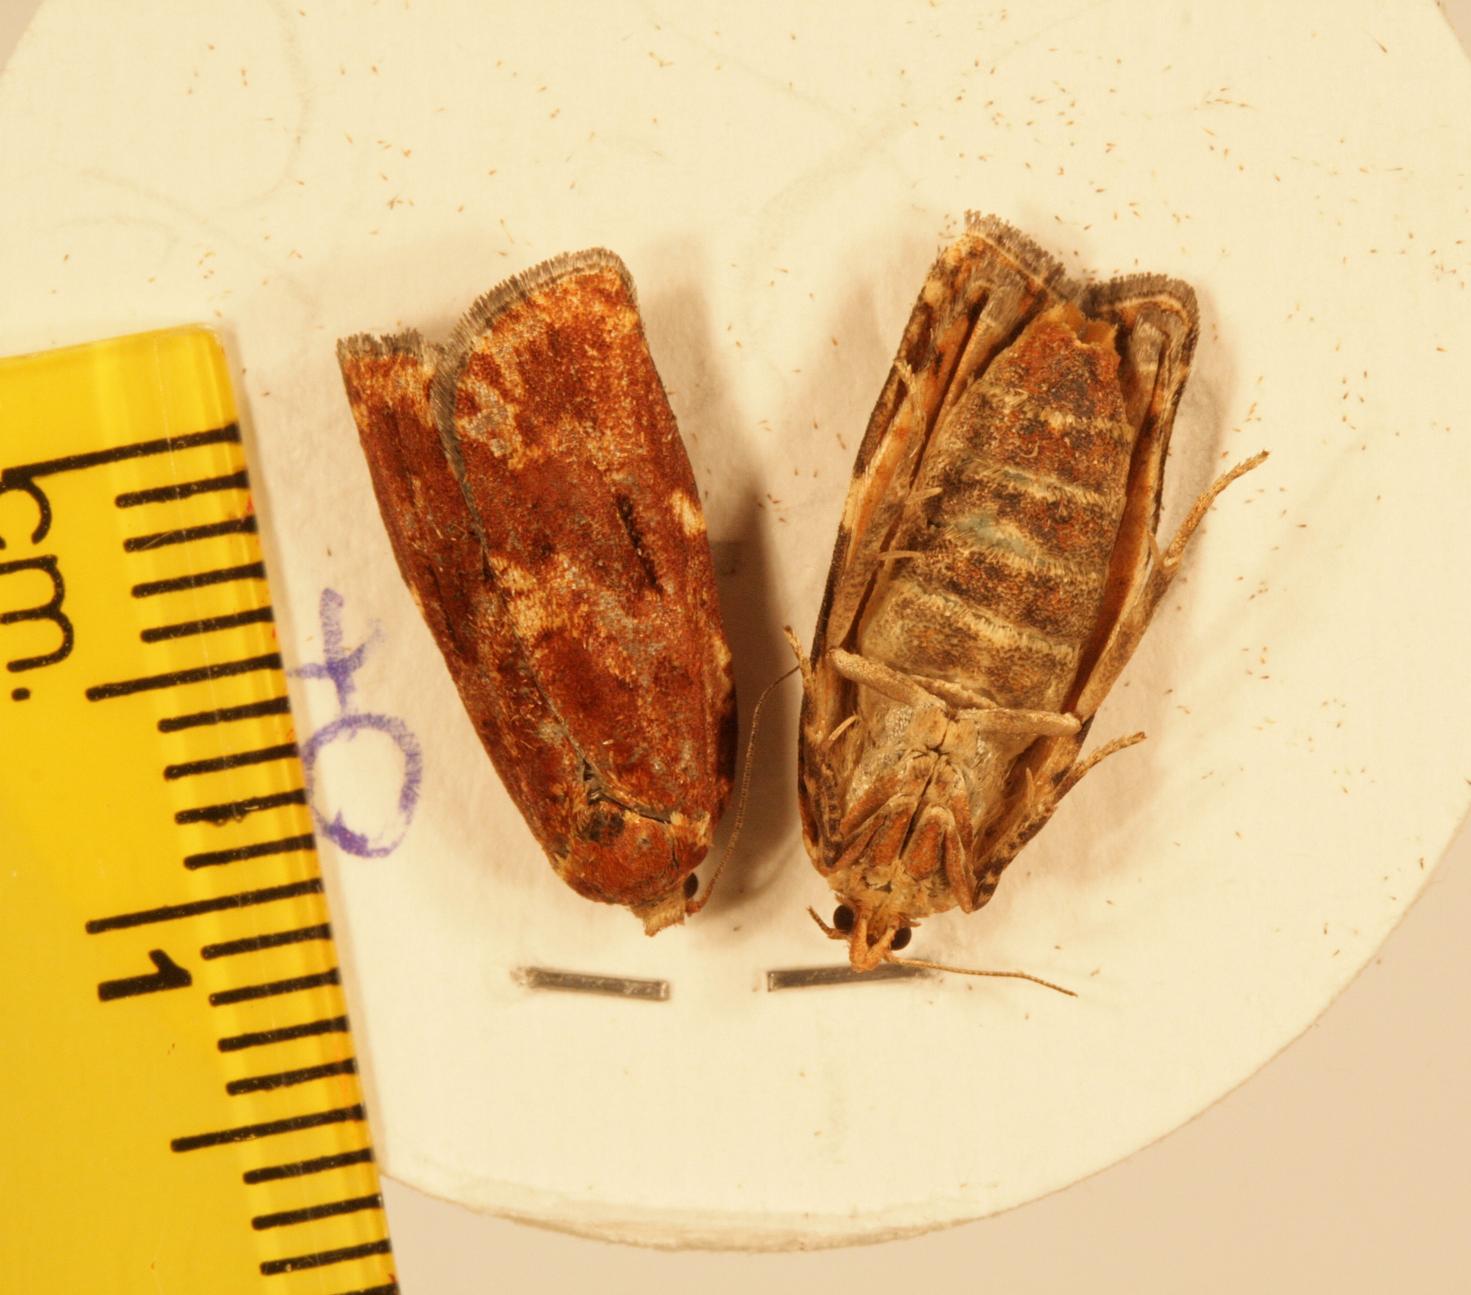 Choristoneura occidentalis females